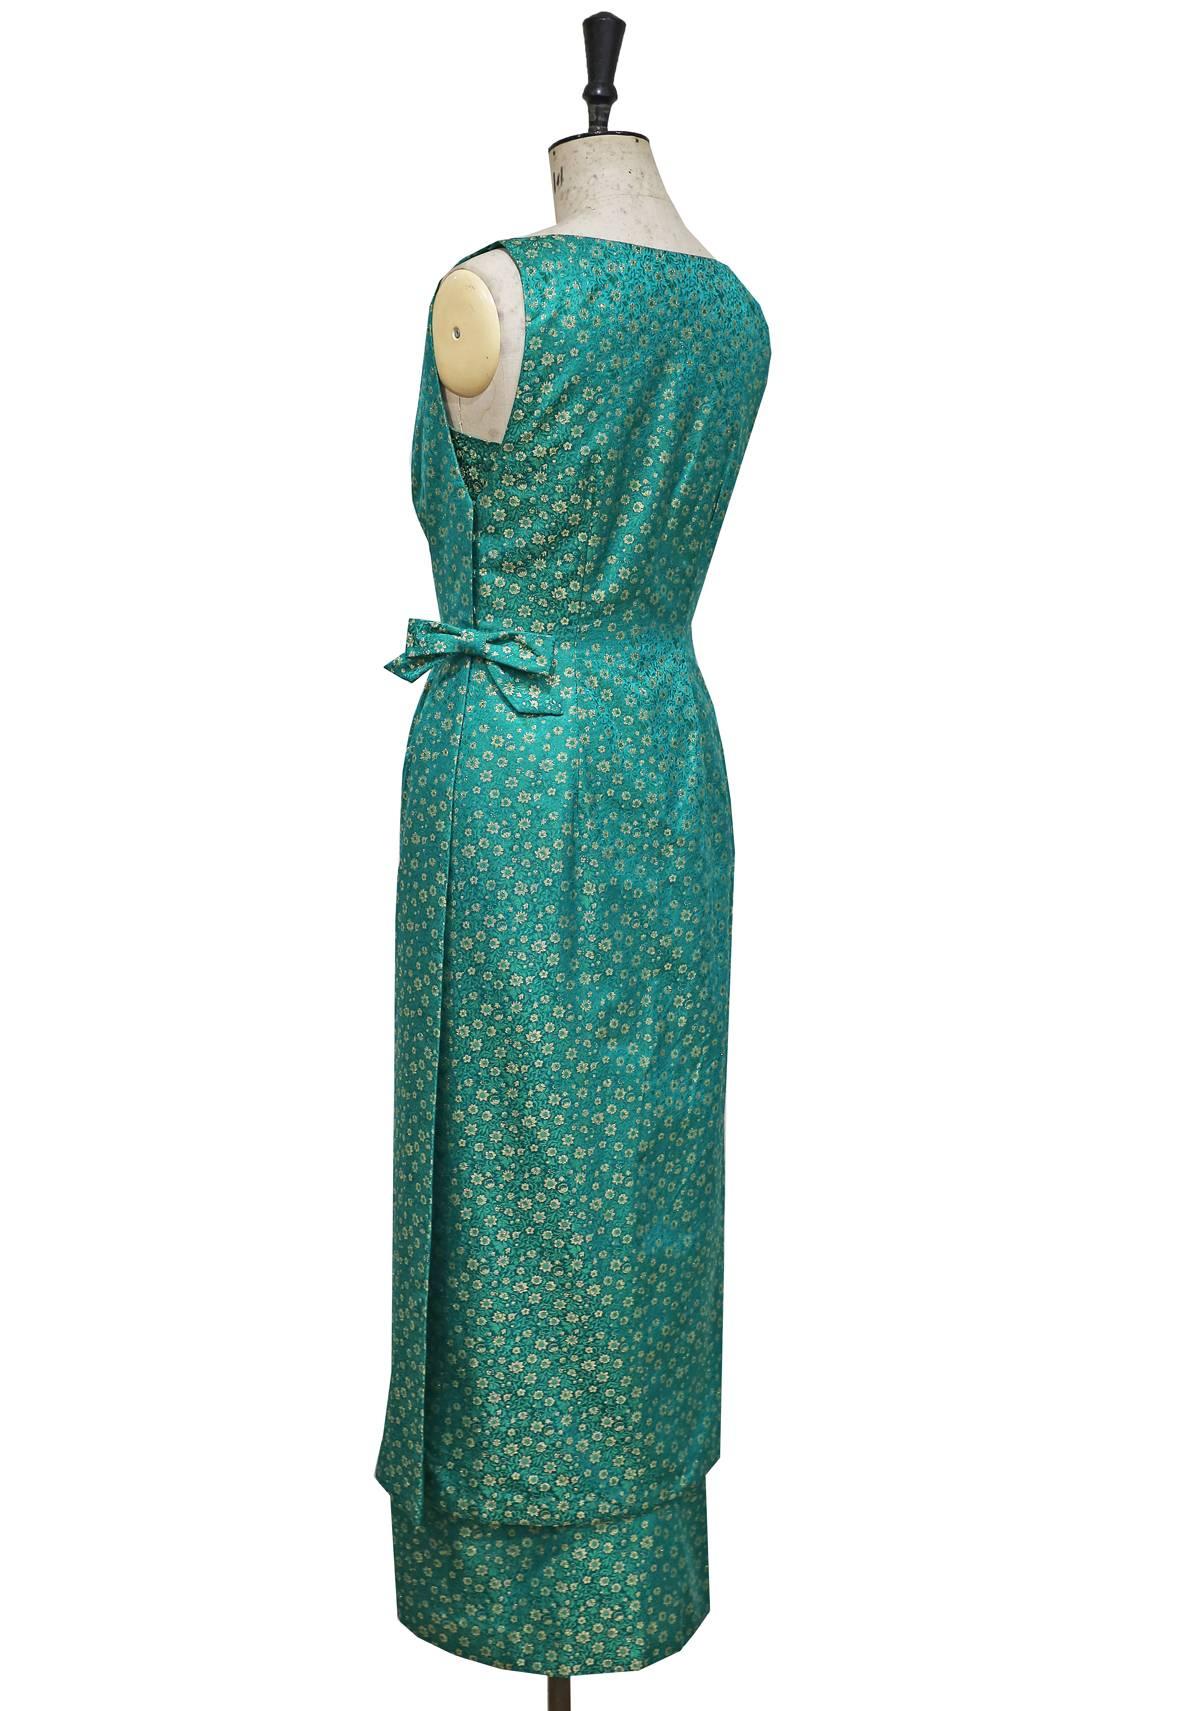 Blue Jean Dessès haute couture emerald and gold silk brocade evening dress, c. 1962 For Sale